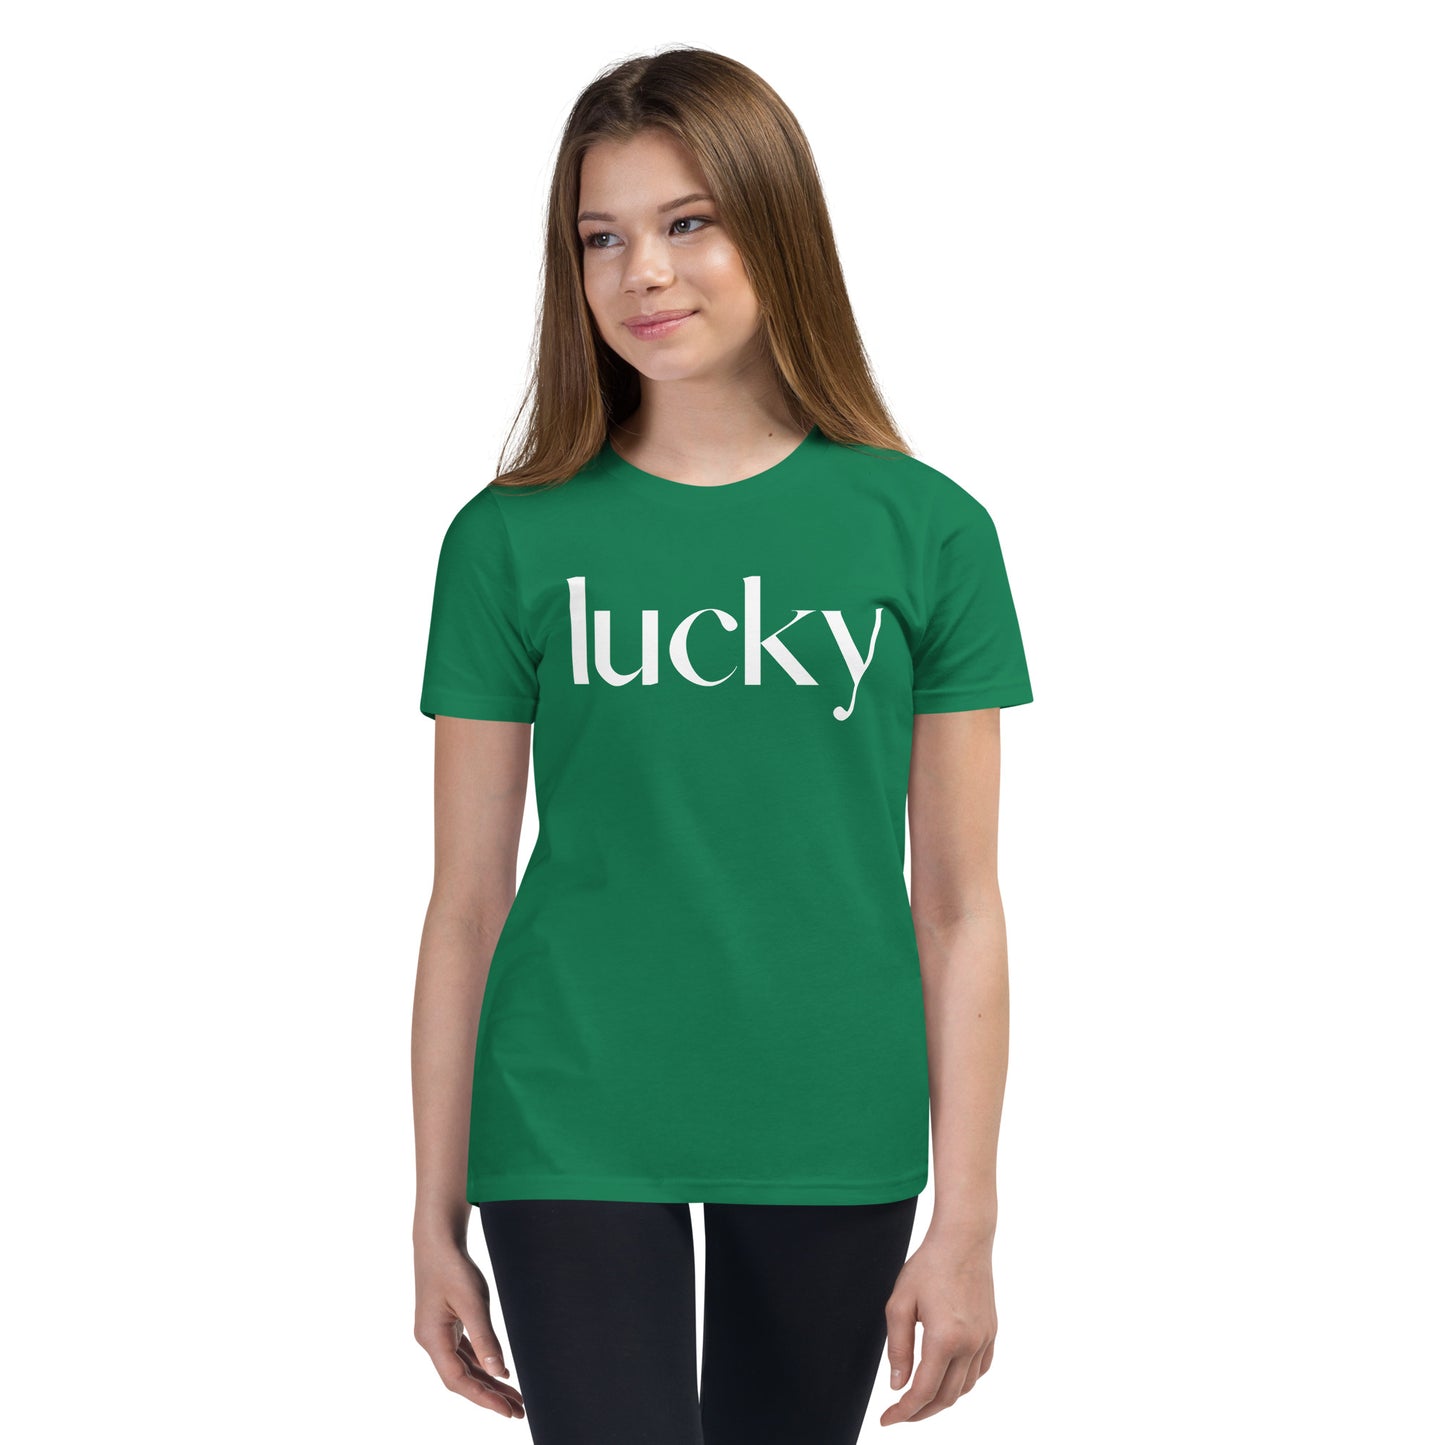 Lucky Youth Short Sleeve T-Shirt